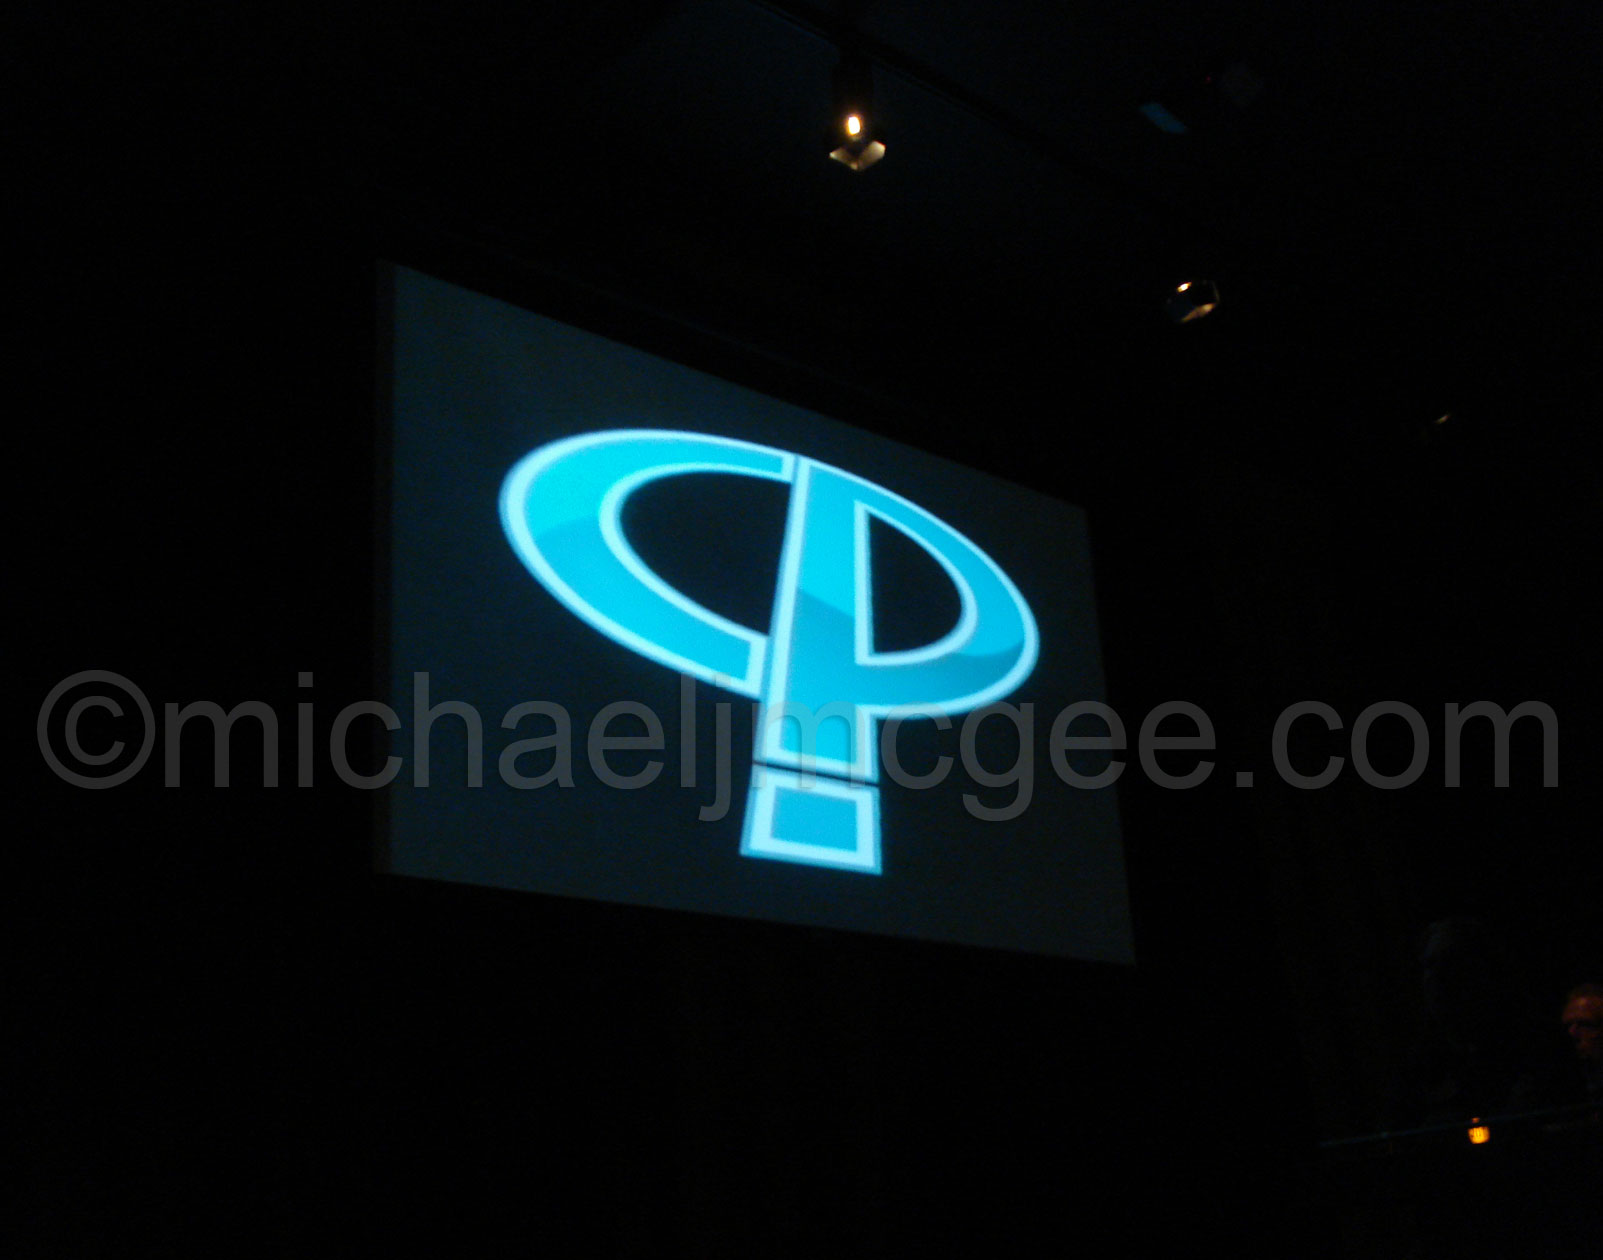 Carl Palmer / michaeljmcgee.com